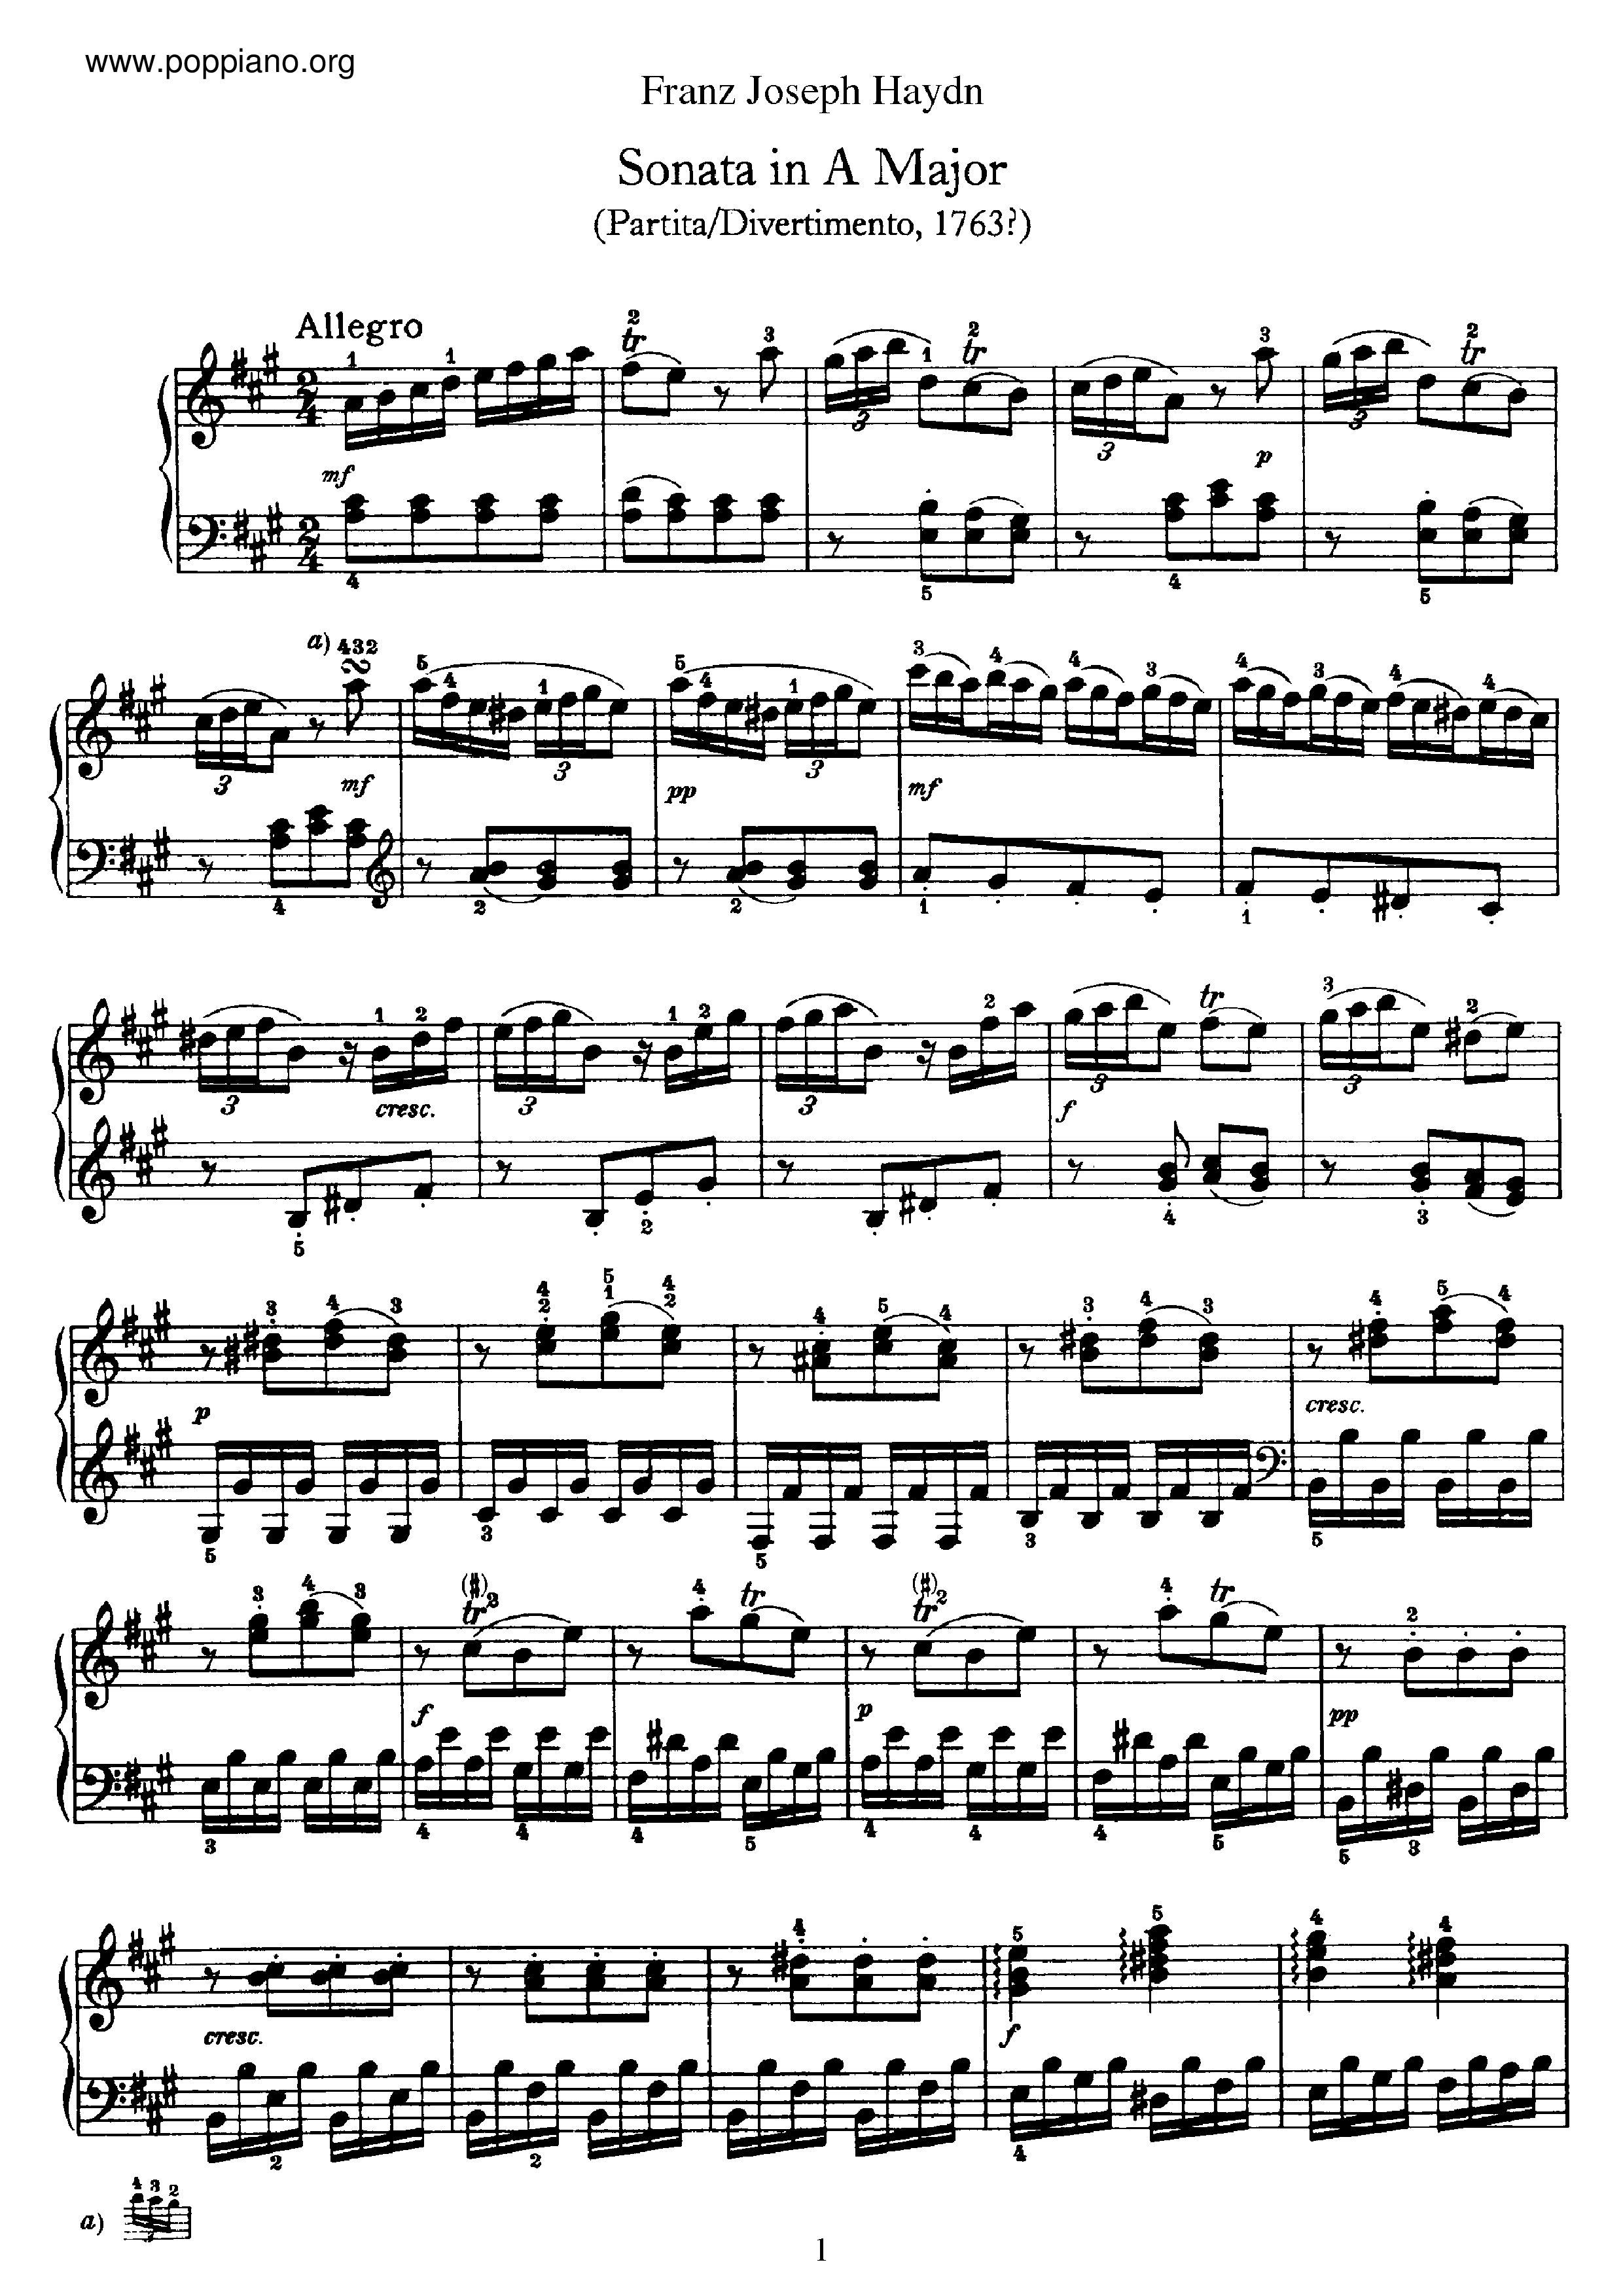 Sonata No.5 in A major琴谱